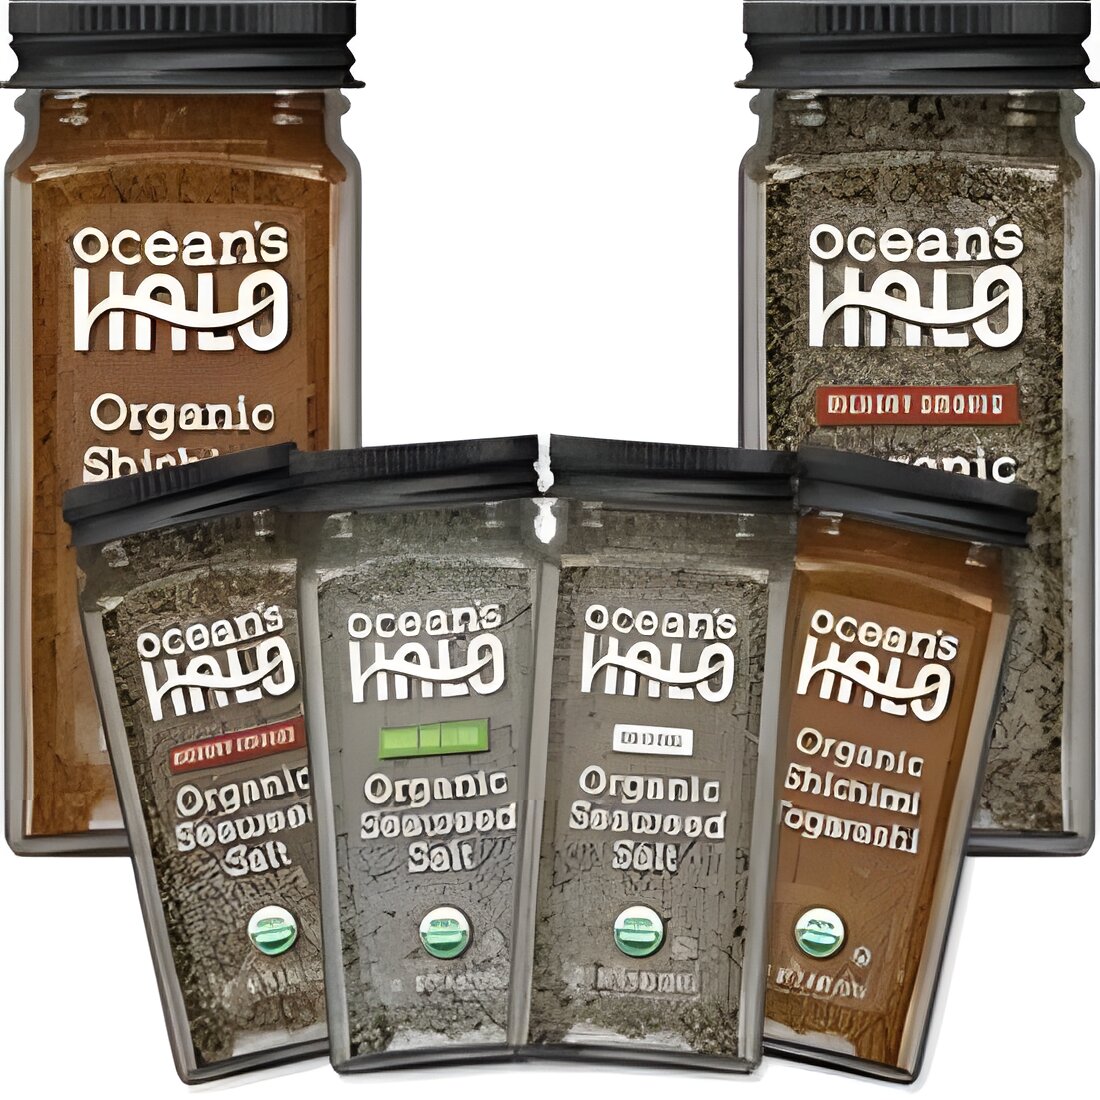 Free Ocean's Halo Organic Seasoning